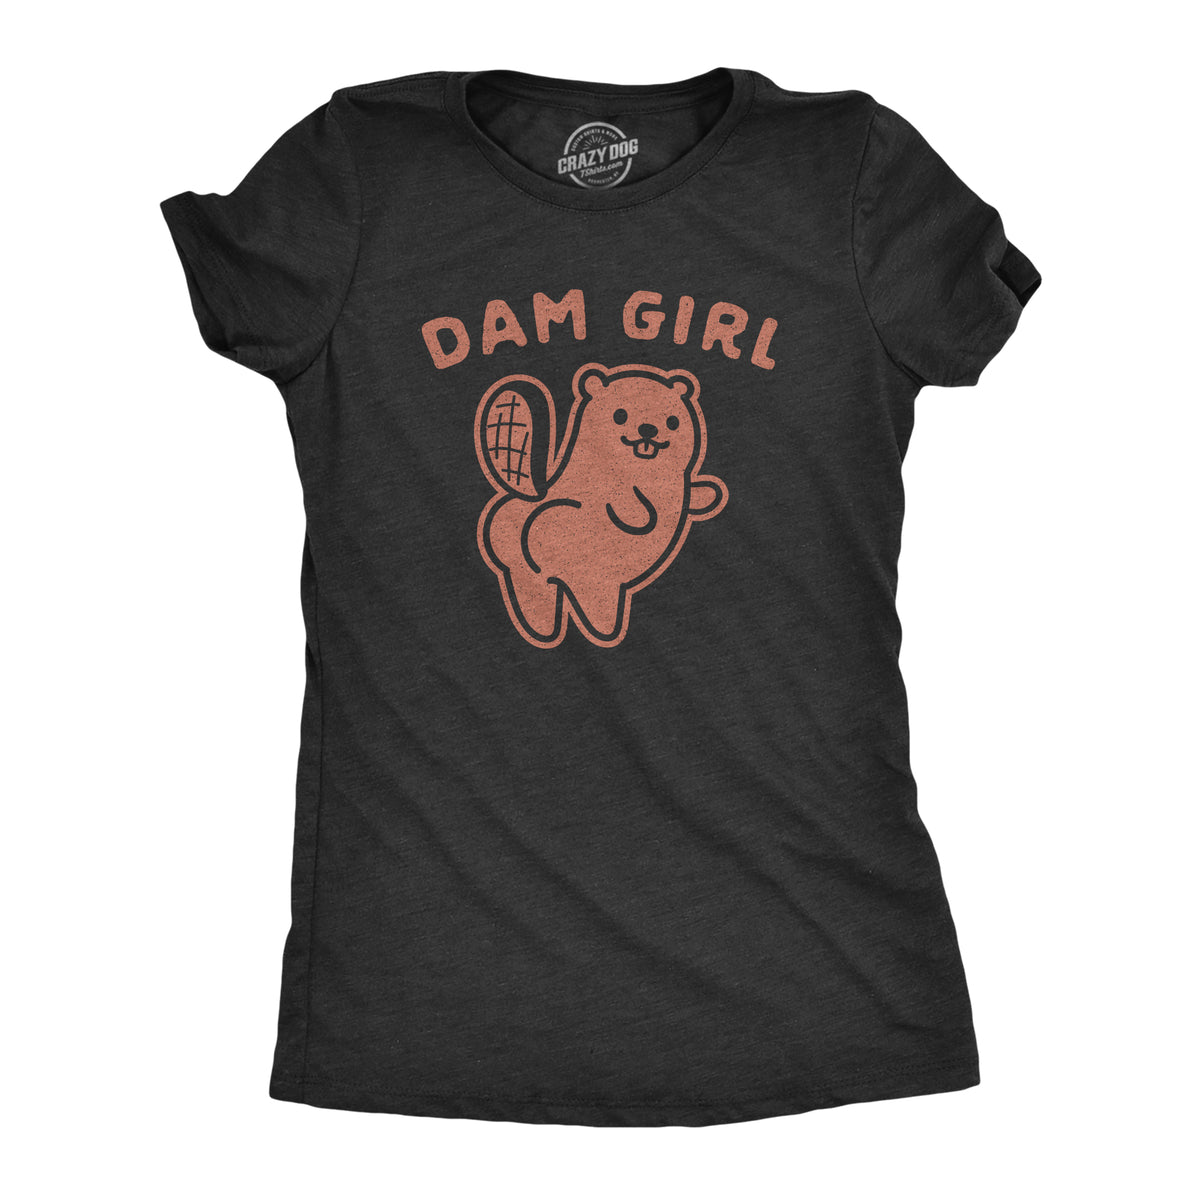 Funny Heather Black - Dam Girl Dam Girl Womens T Shirt Nerdy Animal Sex Tee